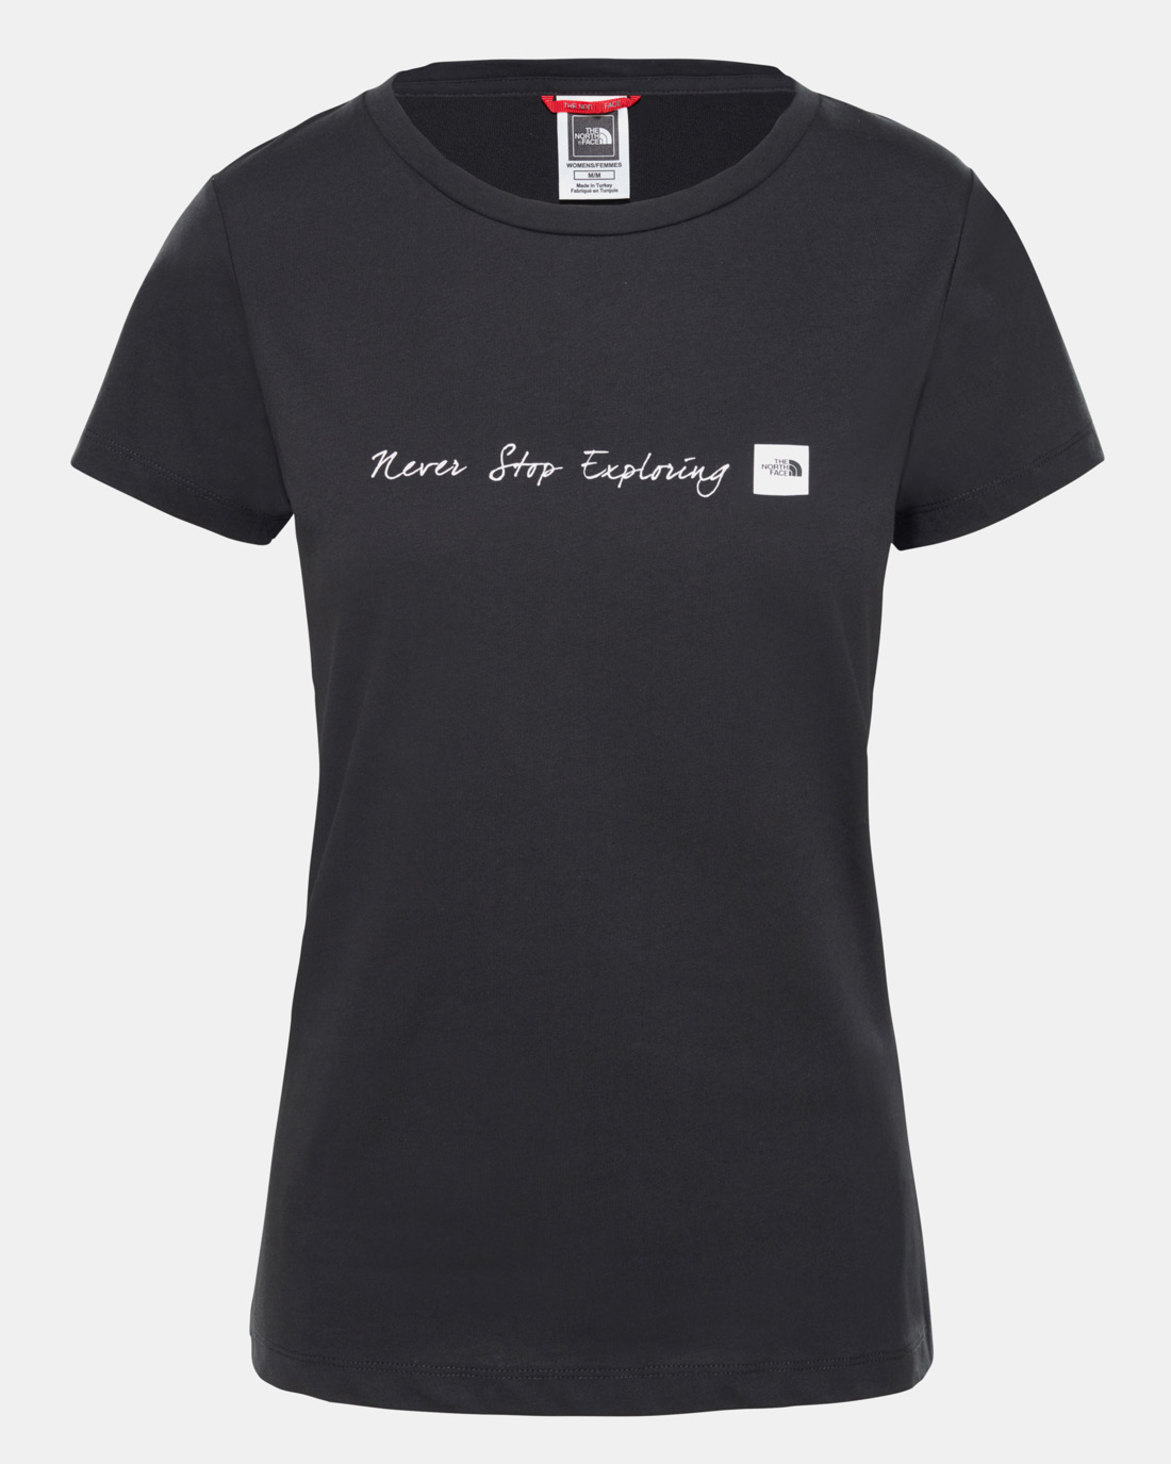 The North Face Never Stop Exploring T-Shirt Black | Zando